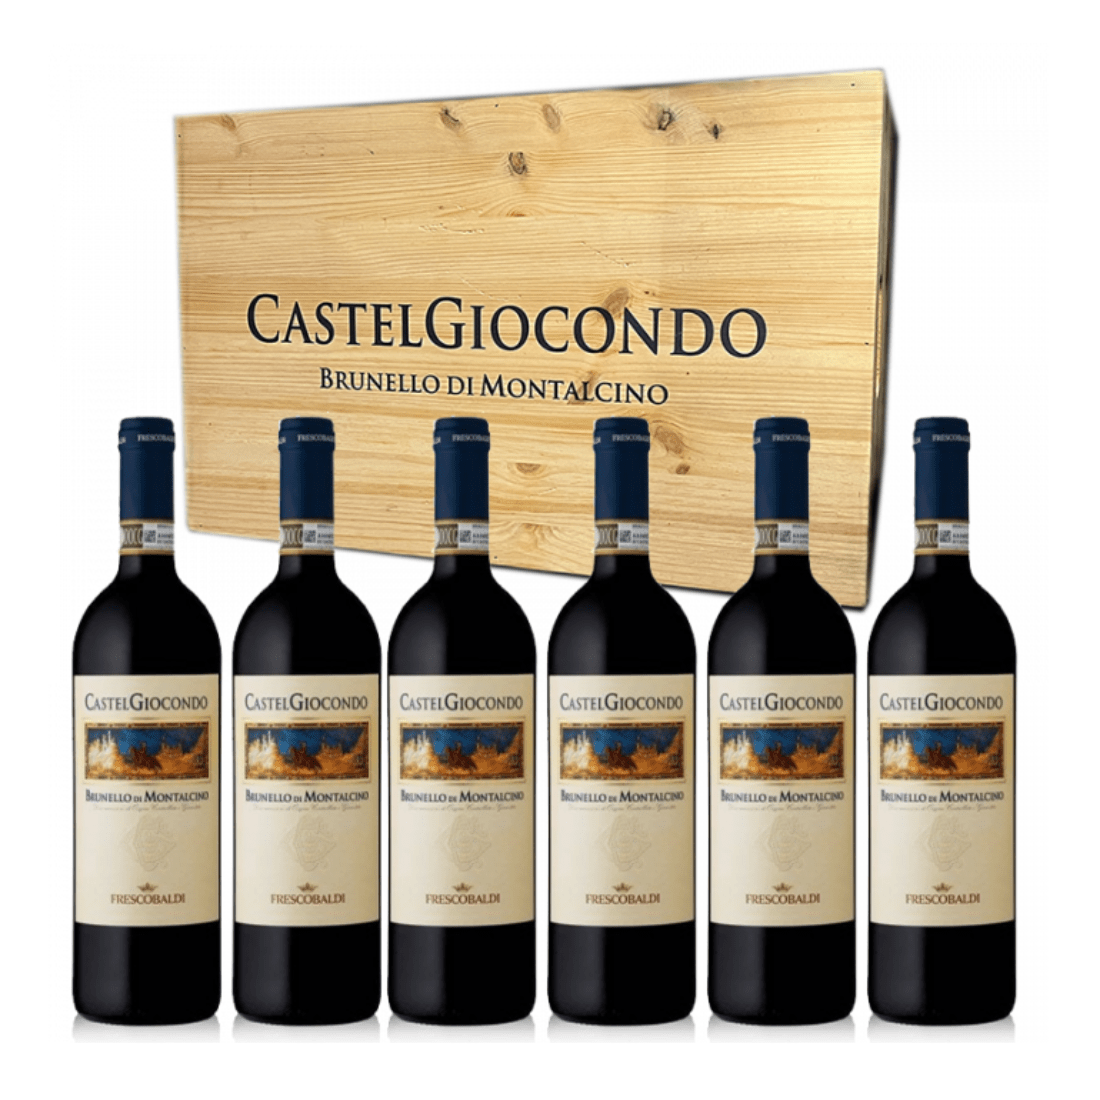 Brunello di Montalcino 2016 Docg Castelgiocondo 6 Bottiglie - Frescobaldi-Vinolog24.com